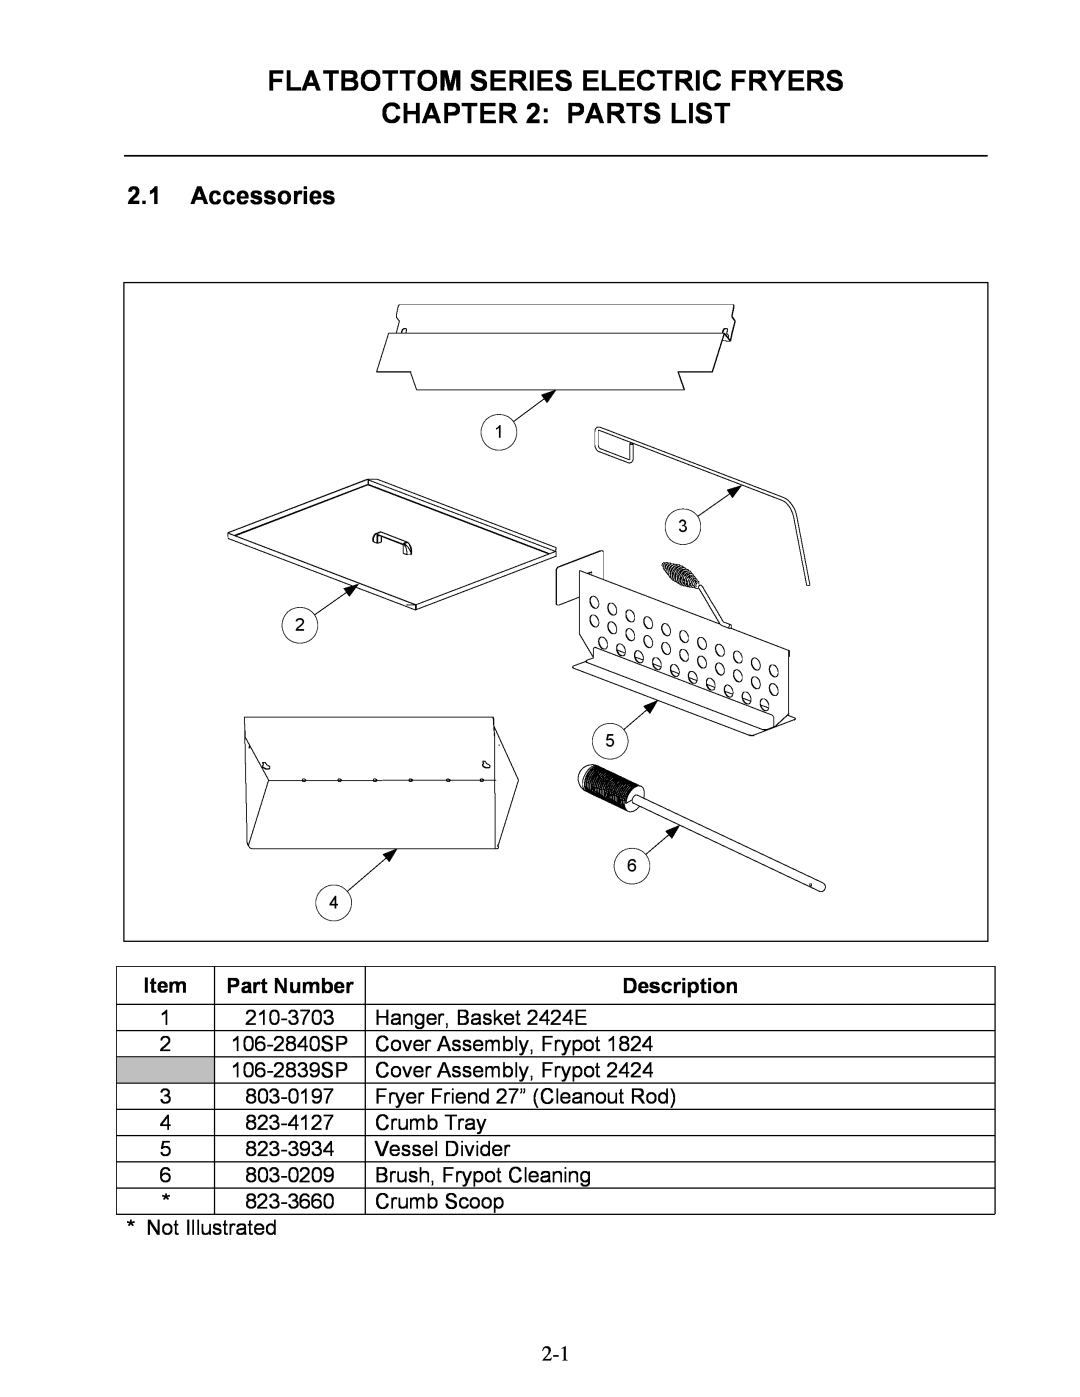 Frymaster 1824E manual Parts List, 2.1Accessories, Part Number, Description, Flatbottom Series Electric Fryers 